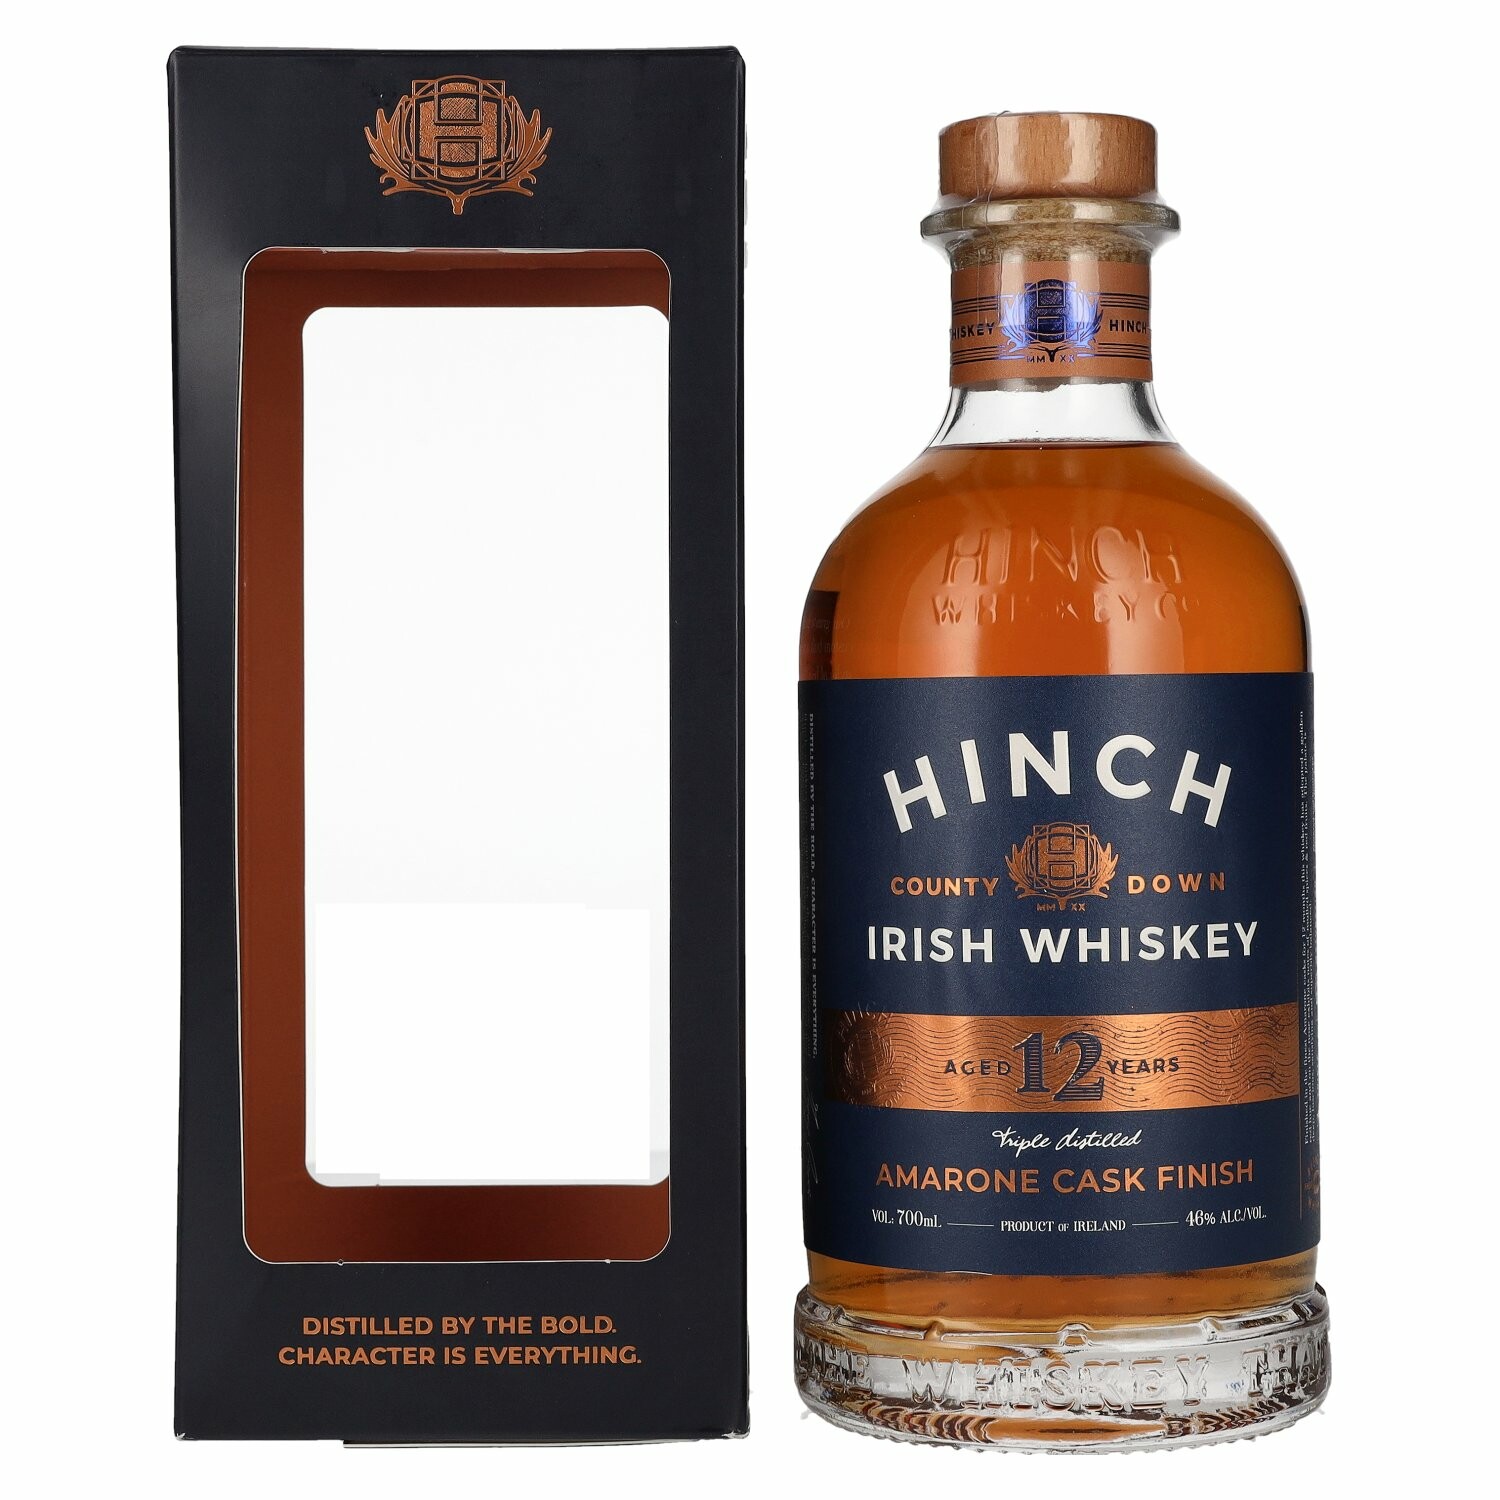 Hinch 12 Years Old Irish Whiskey Amarone Cask Finish 46% Vol. 0,7l in Giftbox